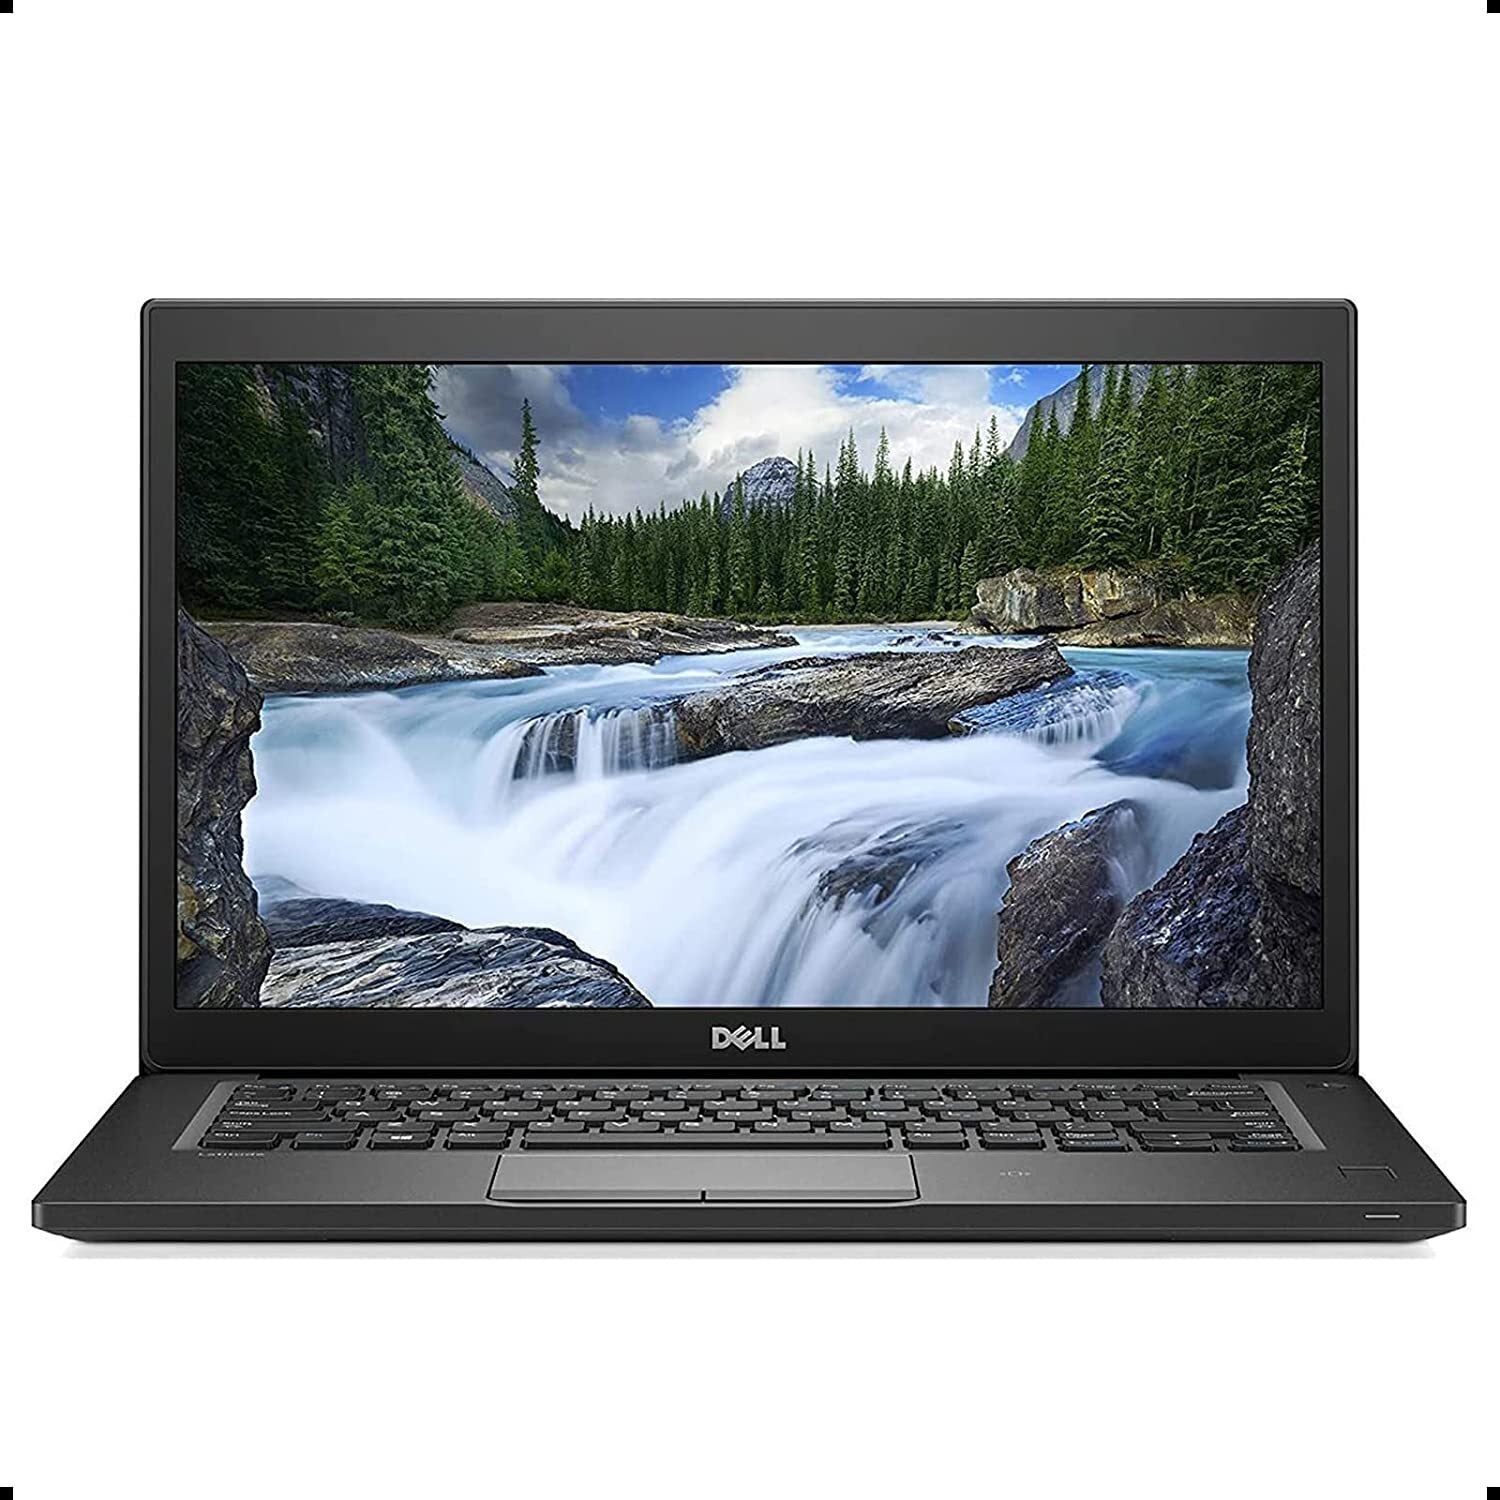 Dell Latitude 7490 14" Laptop i7-8650U 512GB 16GB RAM - Good Condition